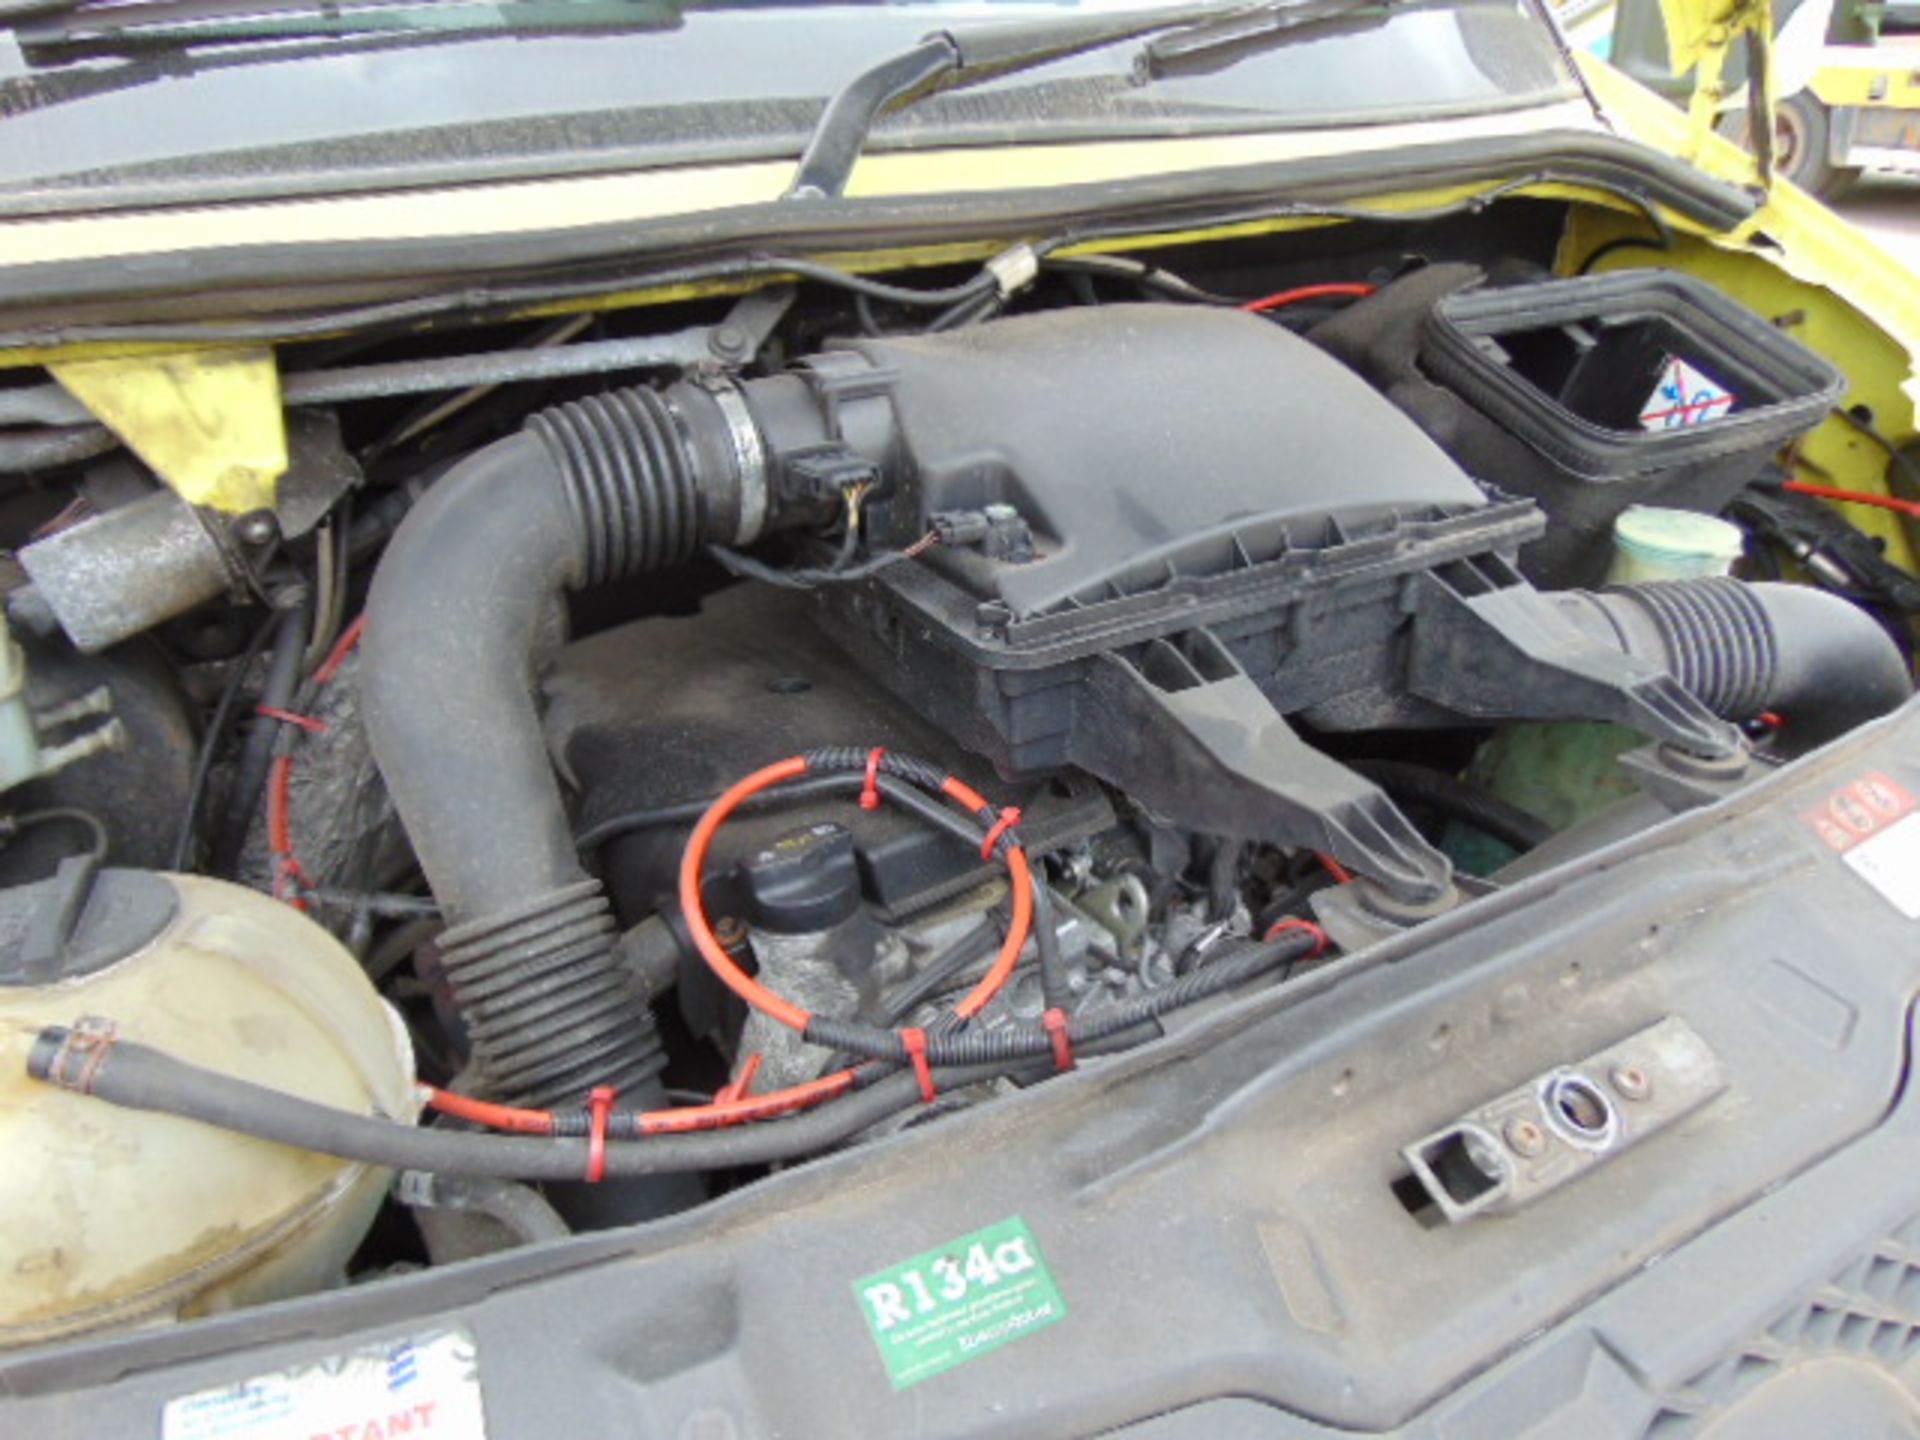 Mercedes Sprinter 515 CDI Turbo diesel ambulance - Image 18 of 18